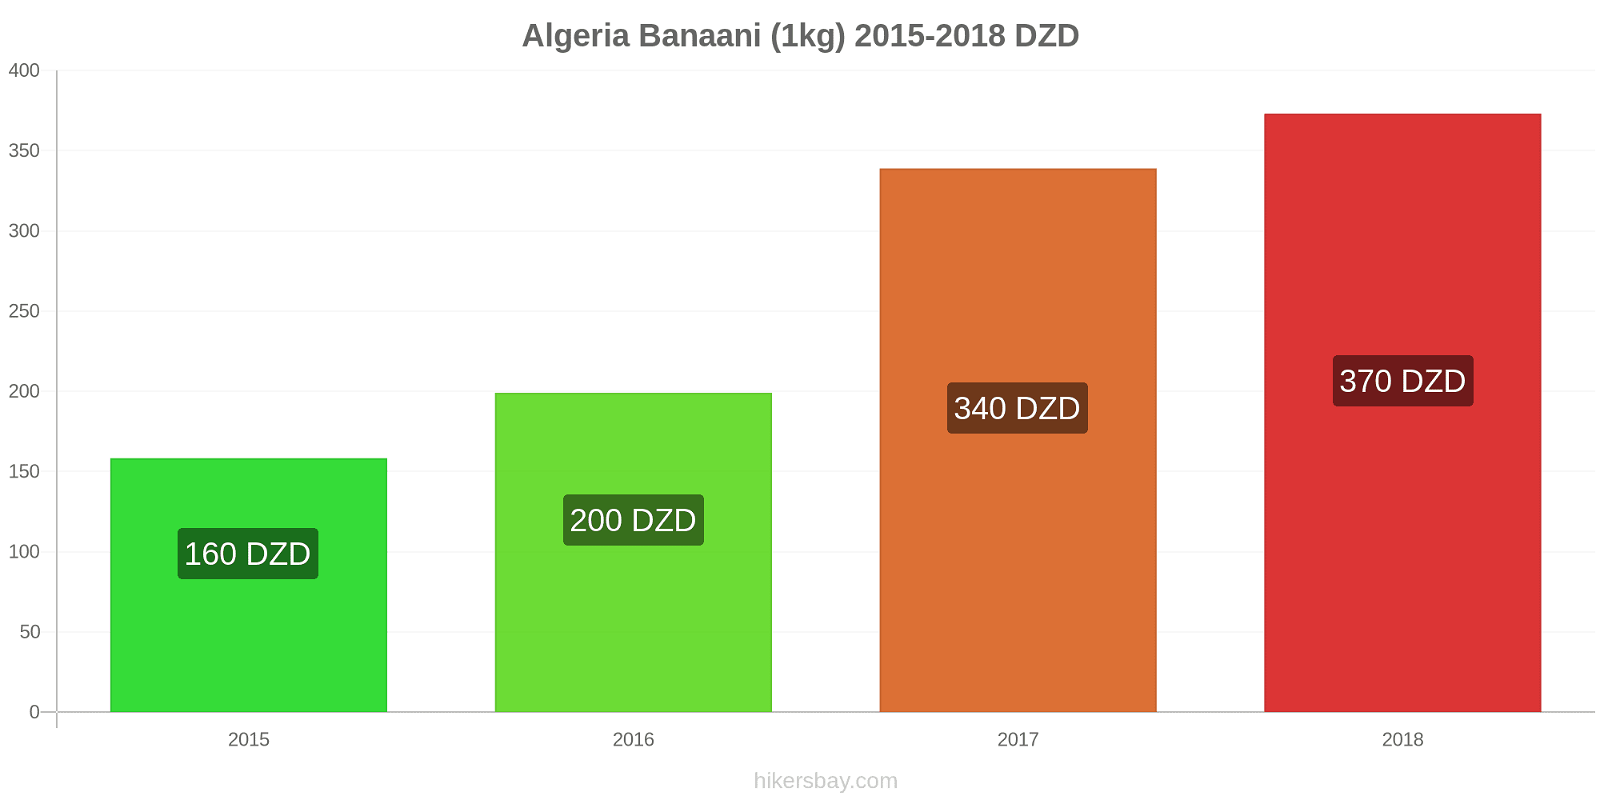 Algeria hintojen muutokset Banaani (1kg) hikersbay.com